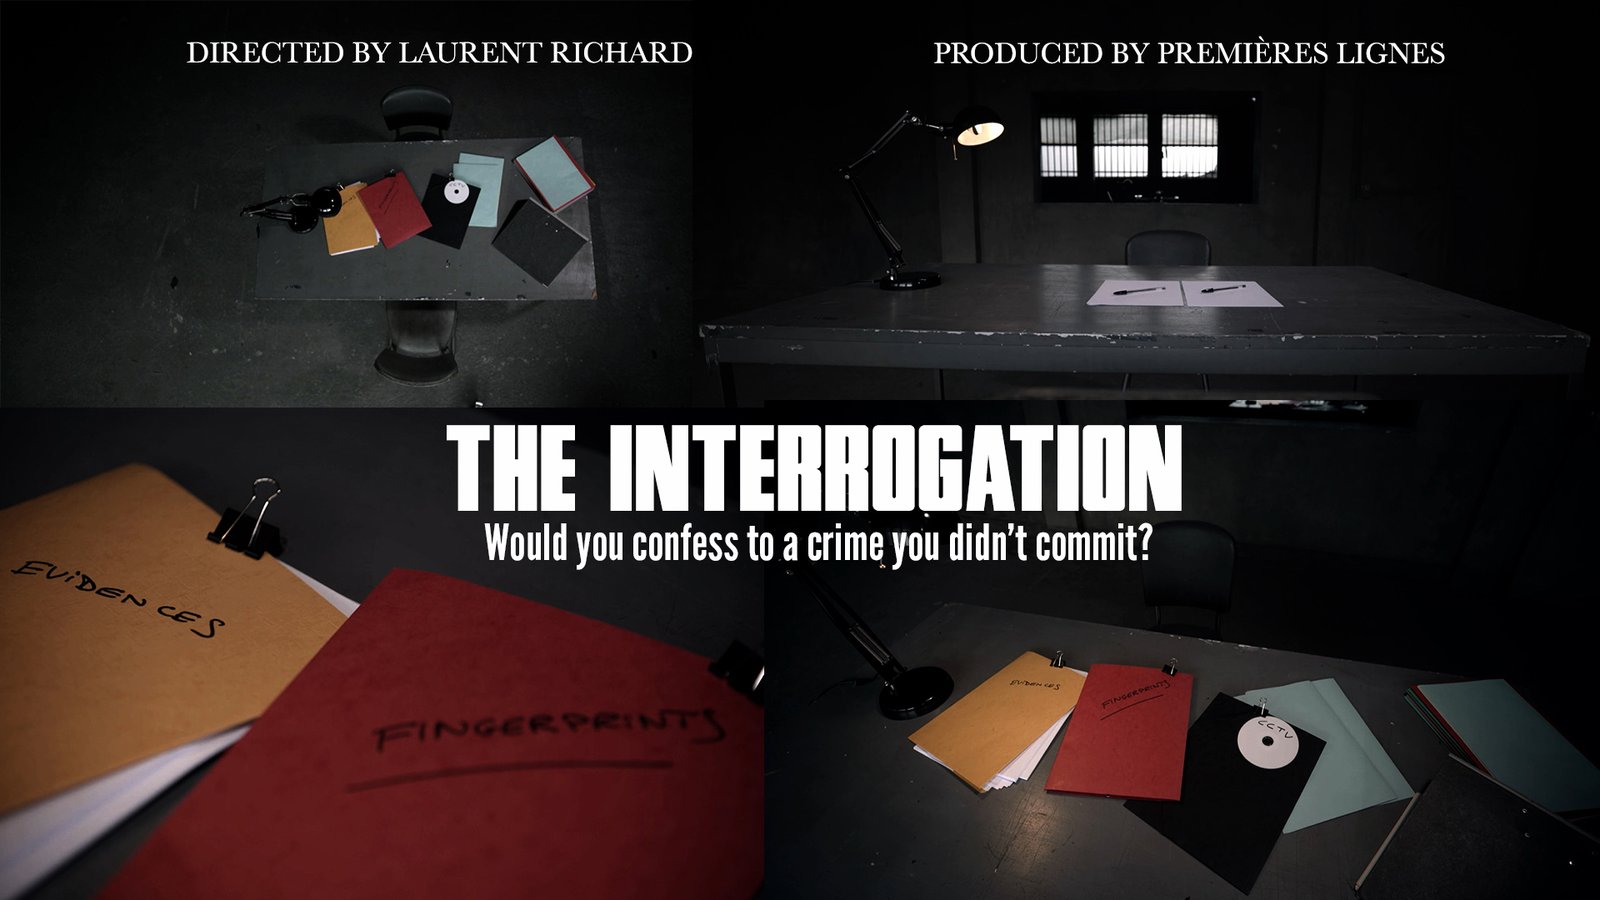 The Interrogation - Investigating False Confessions